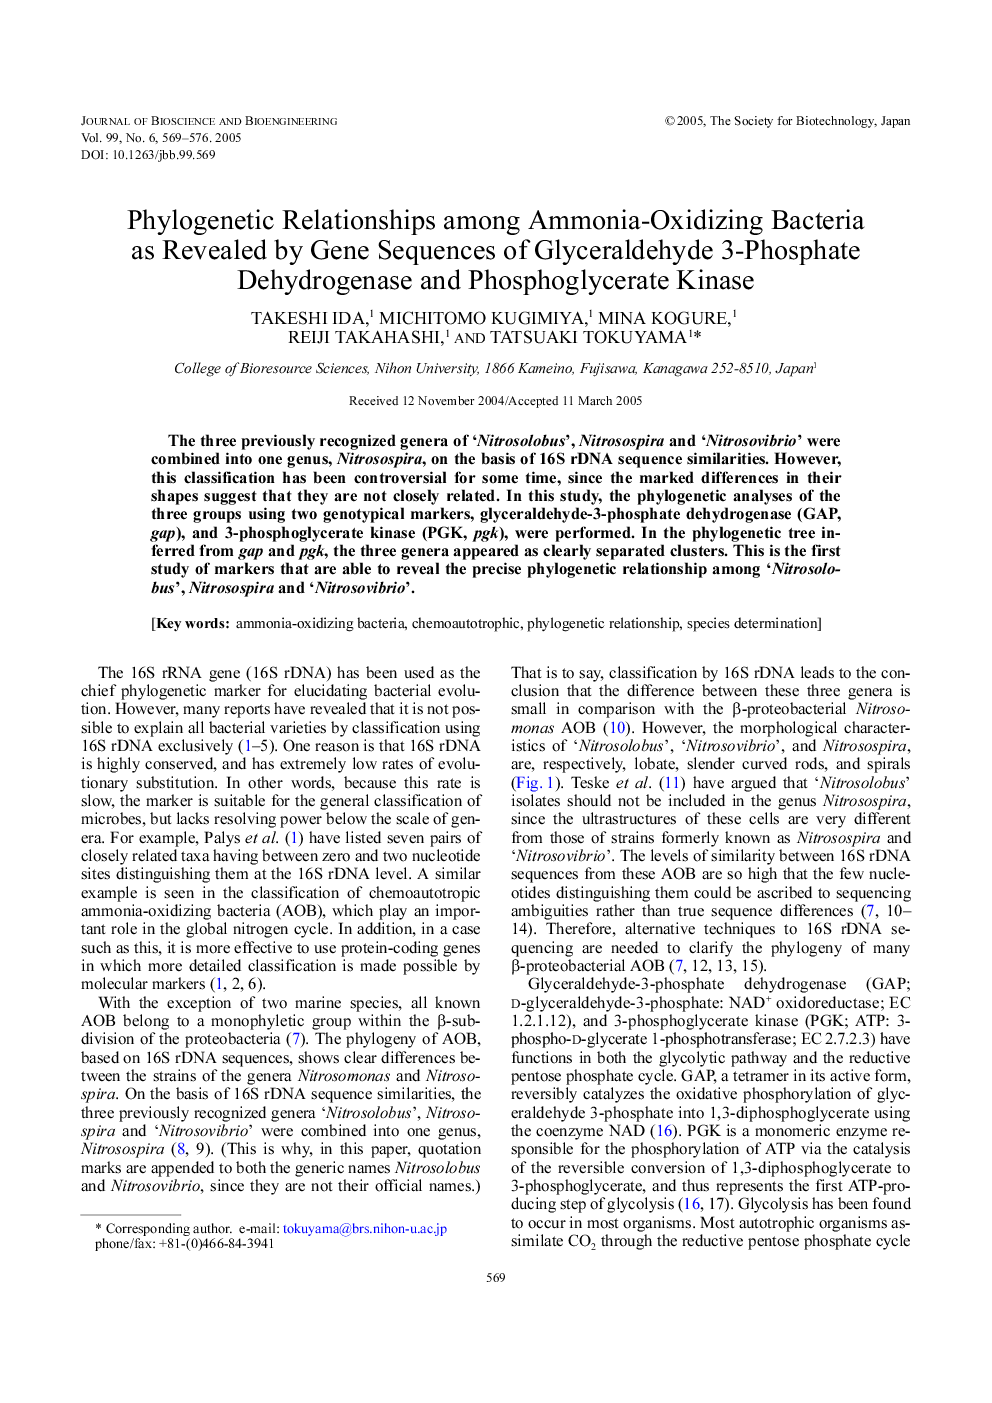 Phylogenetic relationships among ammonia-oxidizing bacteria as revealed by gene sequences of glyceraldehyde 3-phosphate dehydrogenase and phosphoglycerate kinase